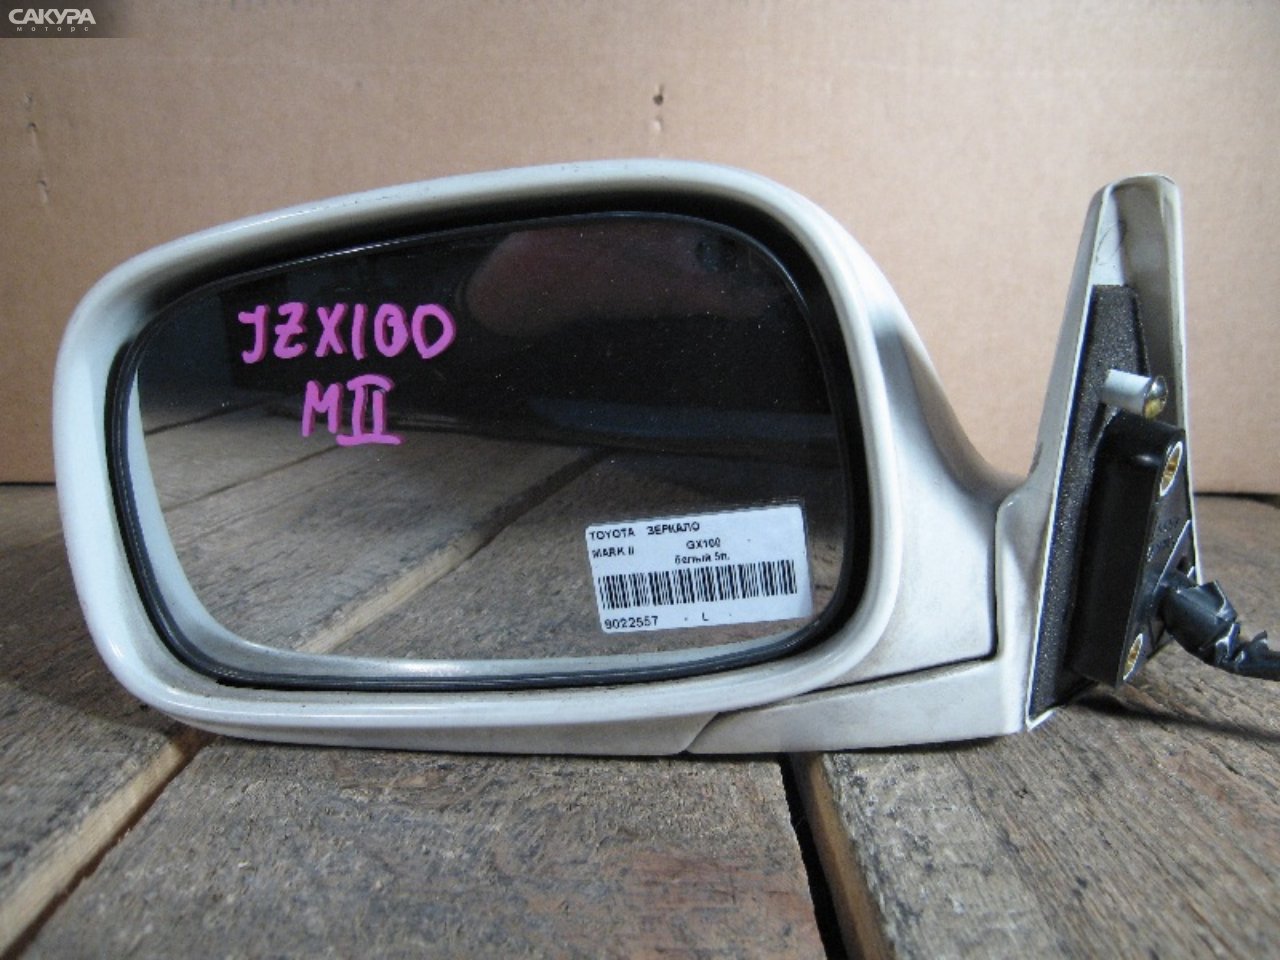 Зеркало боковое левое Toyota Mark II GX100: купить в Сакура Абакан.